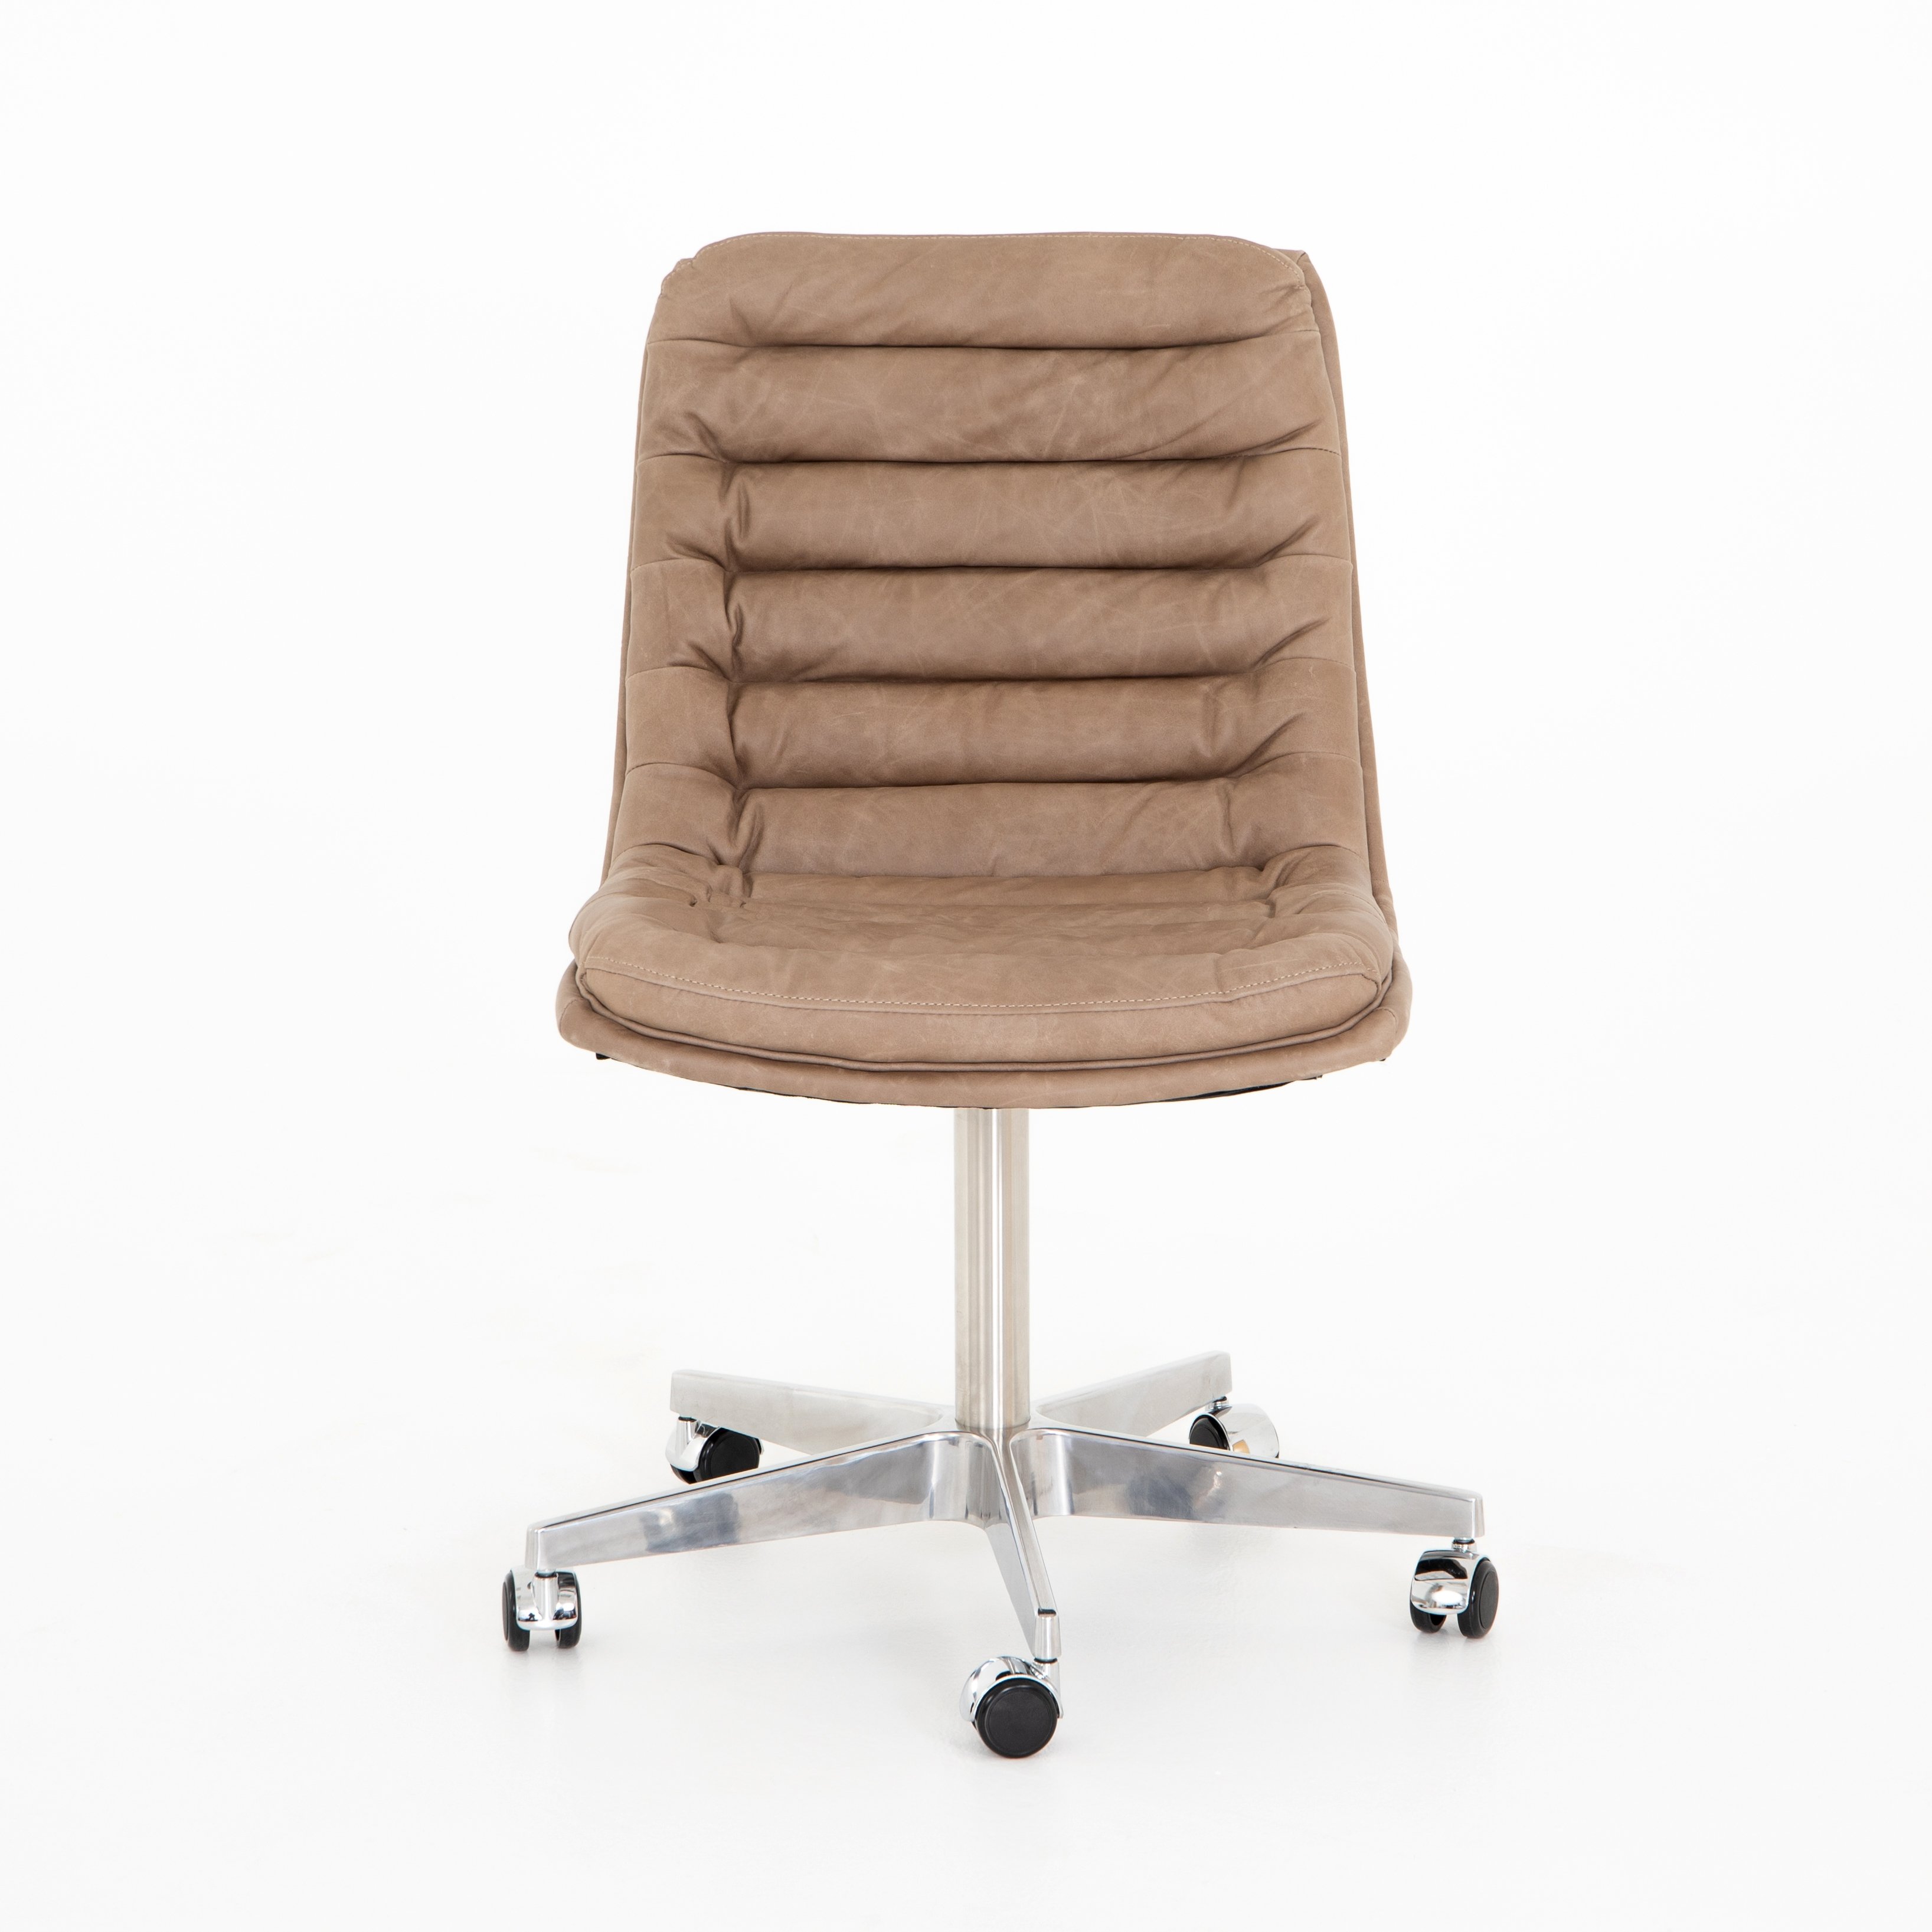 Malibu Desk Chair-Natural Wash Mushroom - Image 2